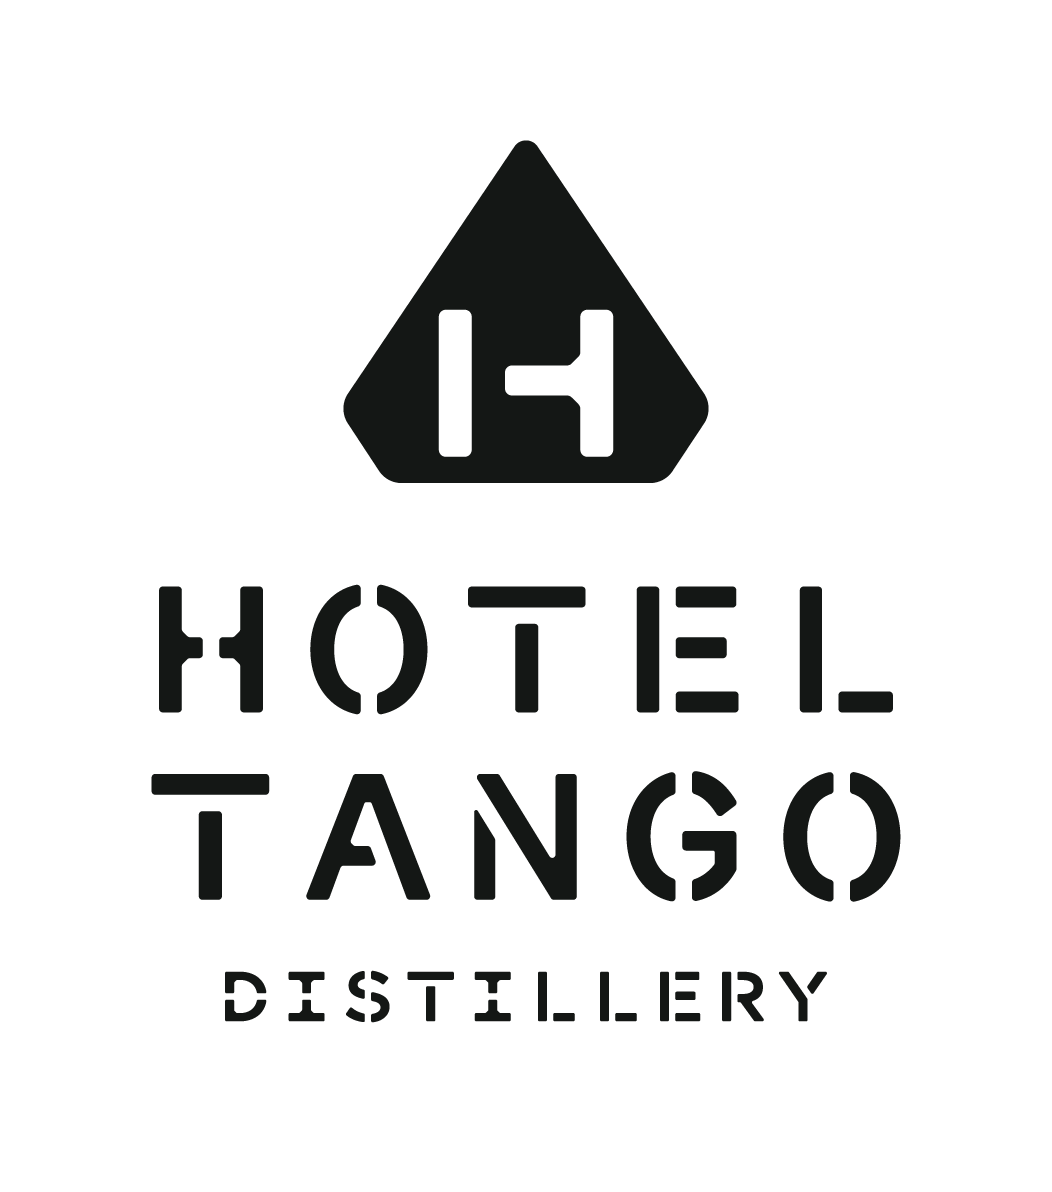 Hotel Tango Distillery